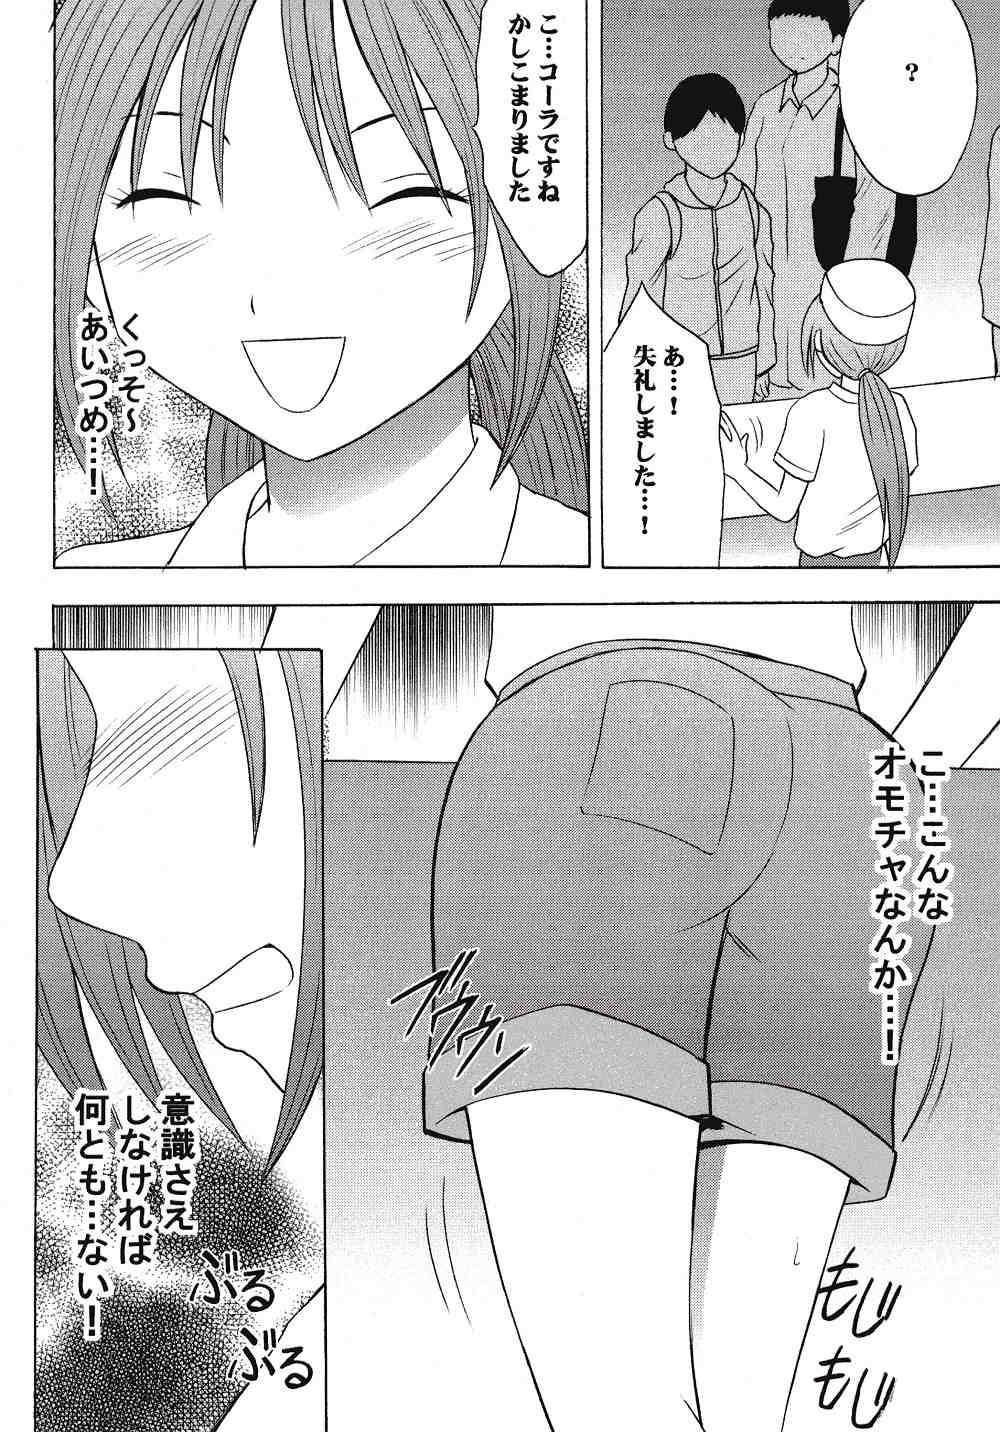 Ass To Mouth IchigoIchie 2 - Ichigo 100 Big breasts - Page 9